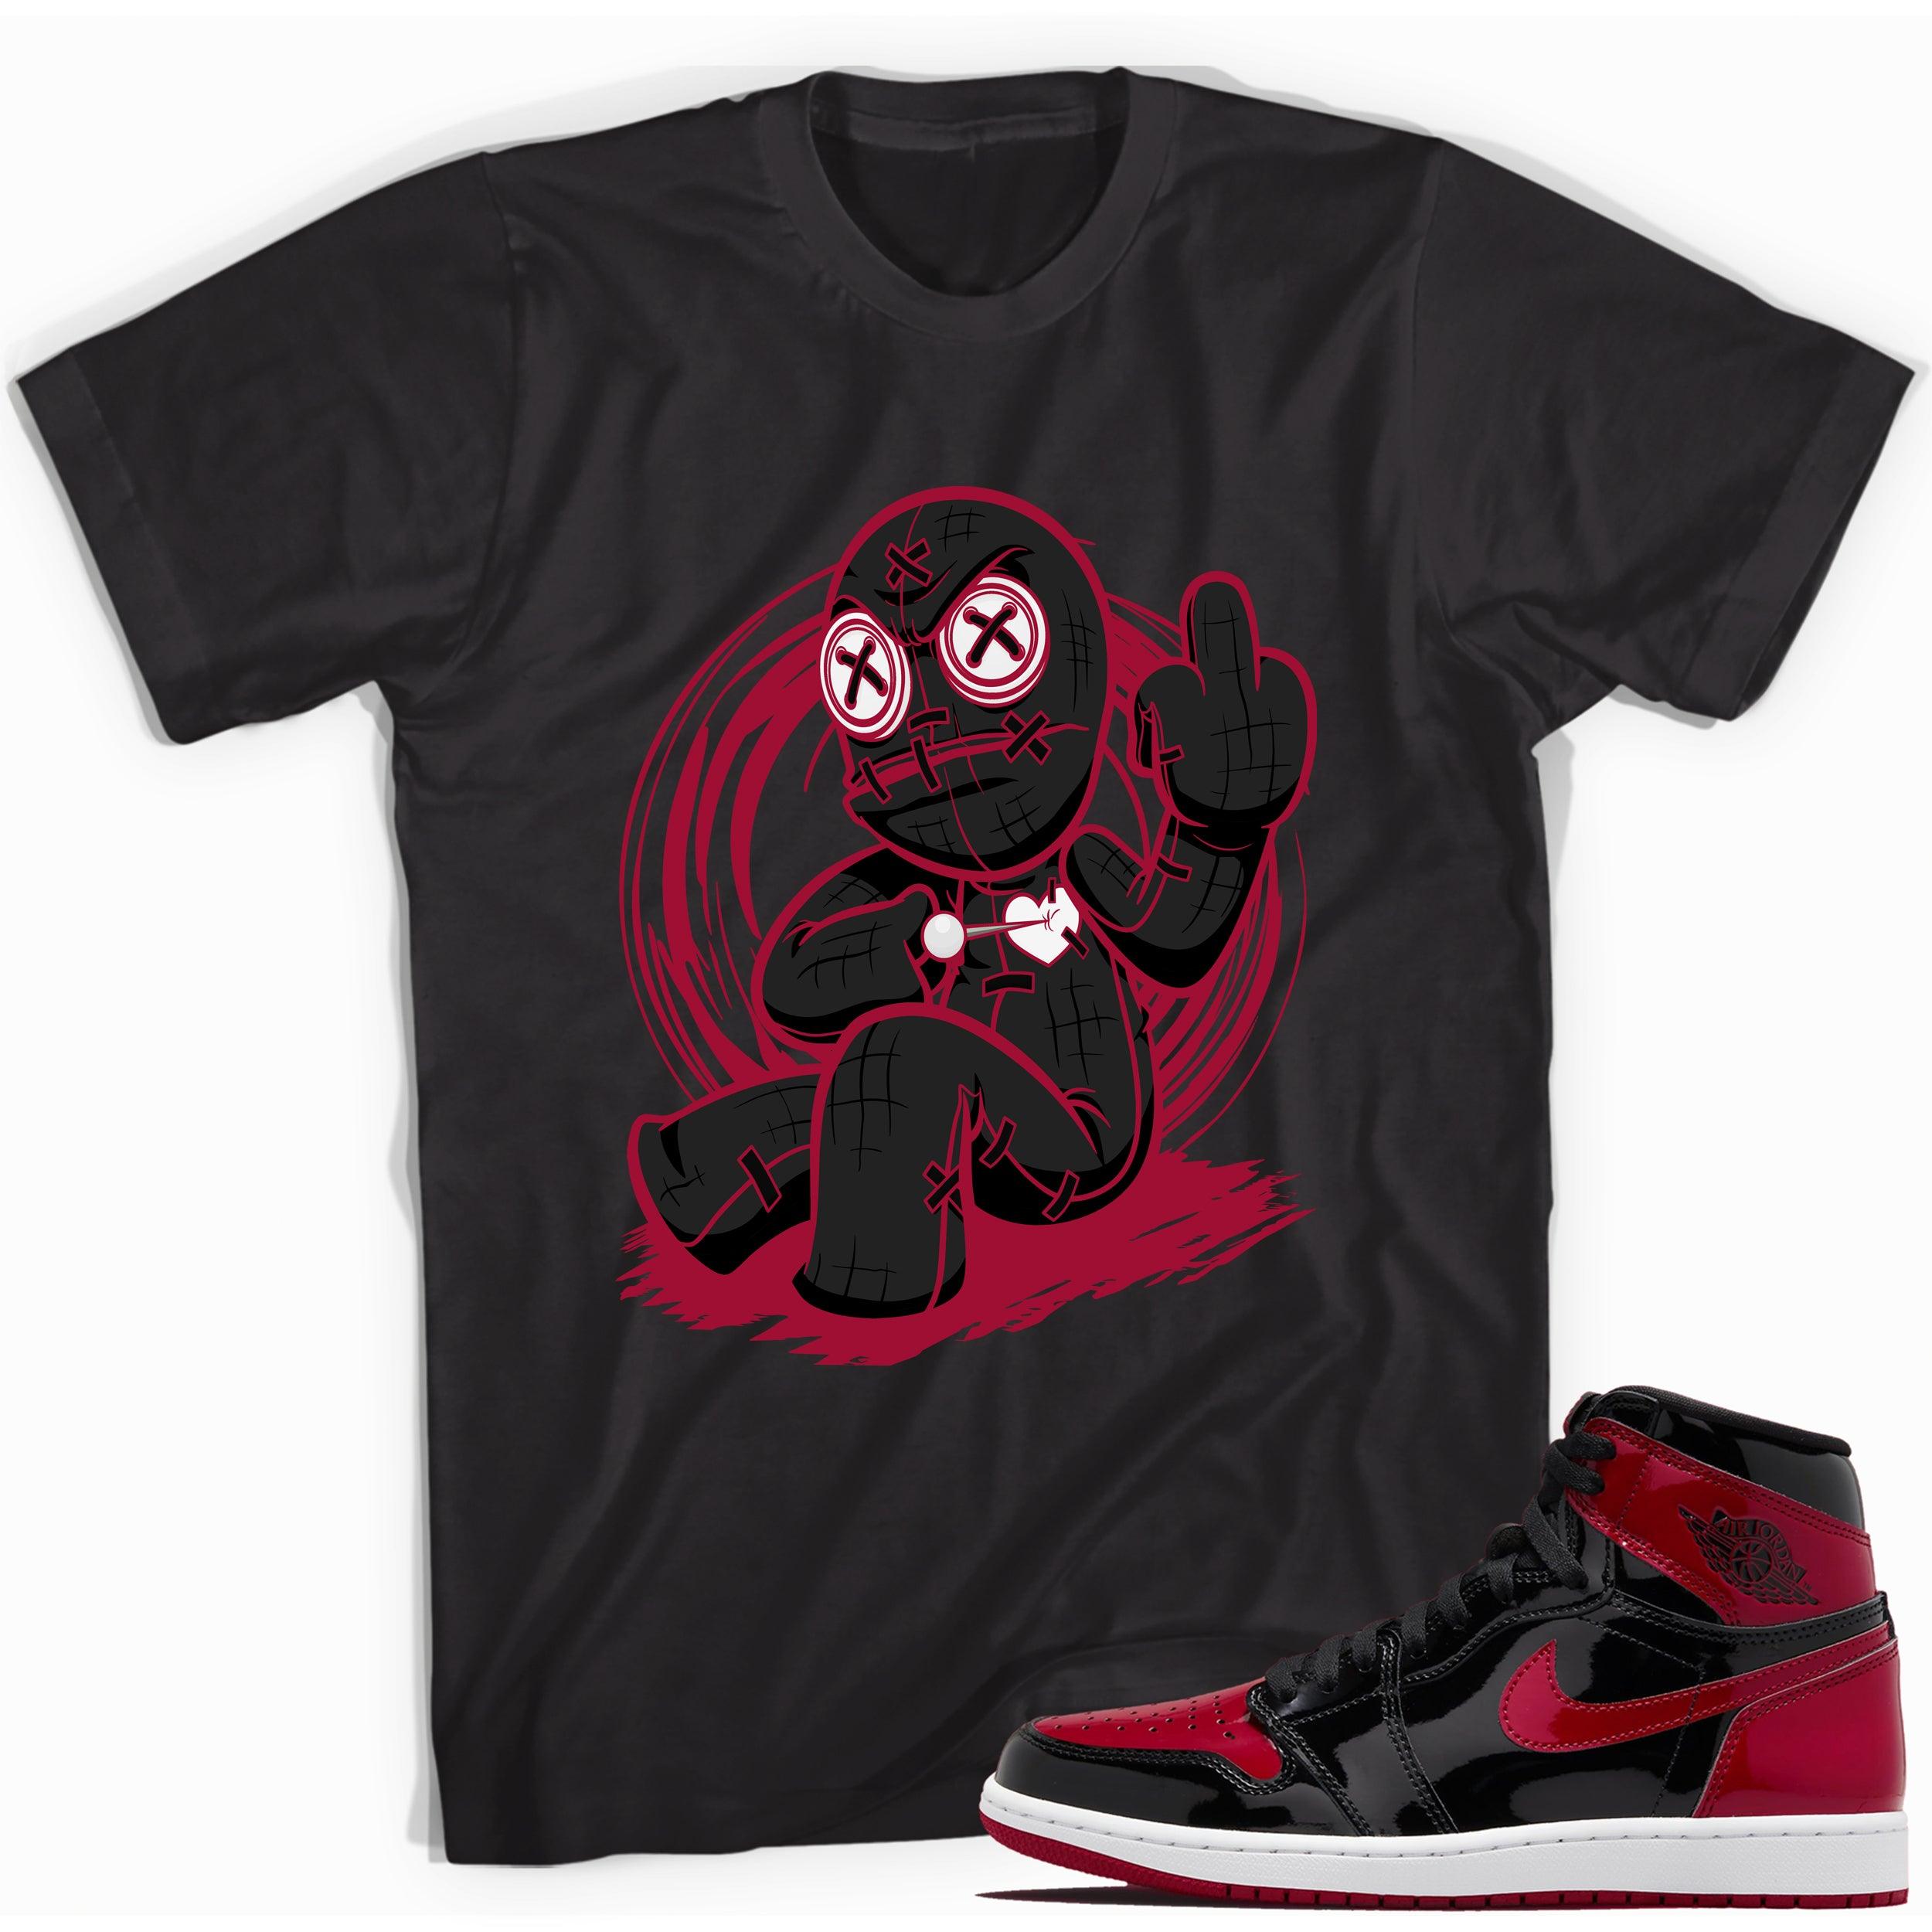 Black Voodoo Shirt for Jordan 1s Bred Patent photo